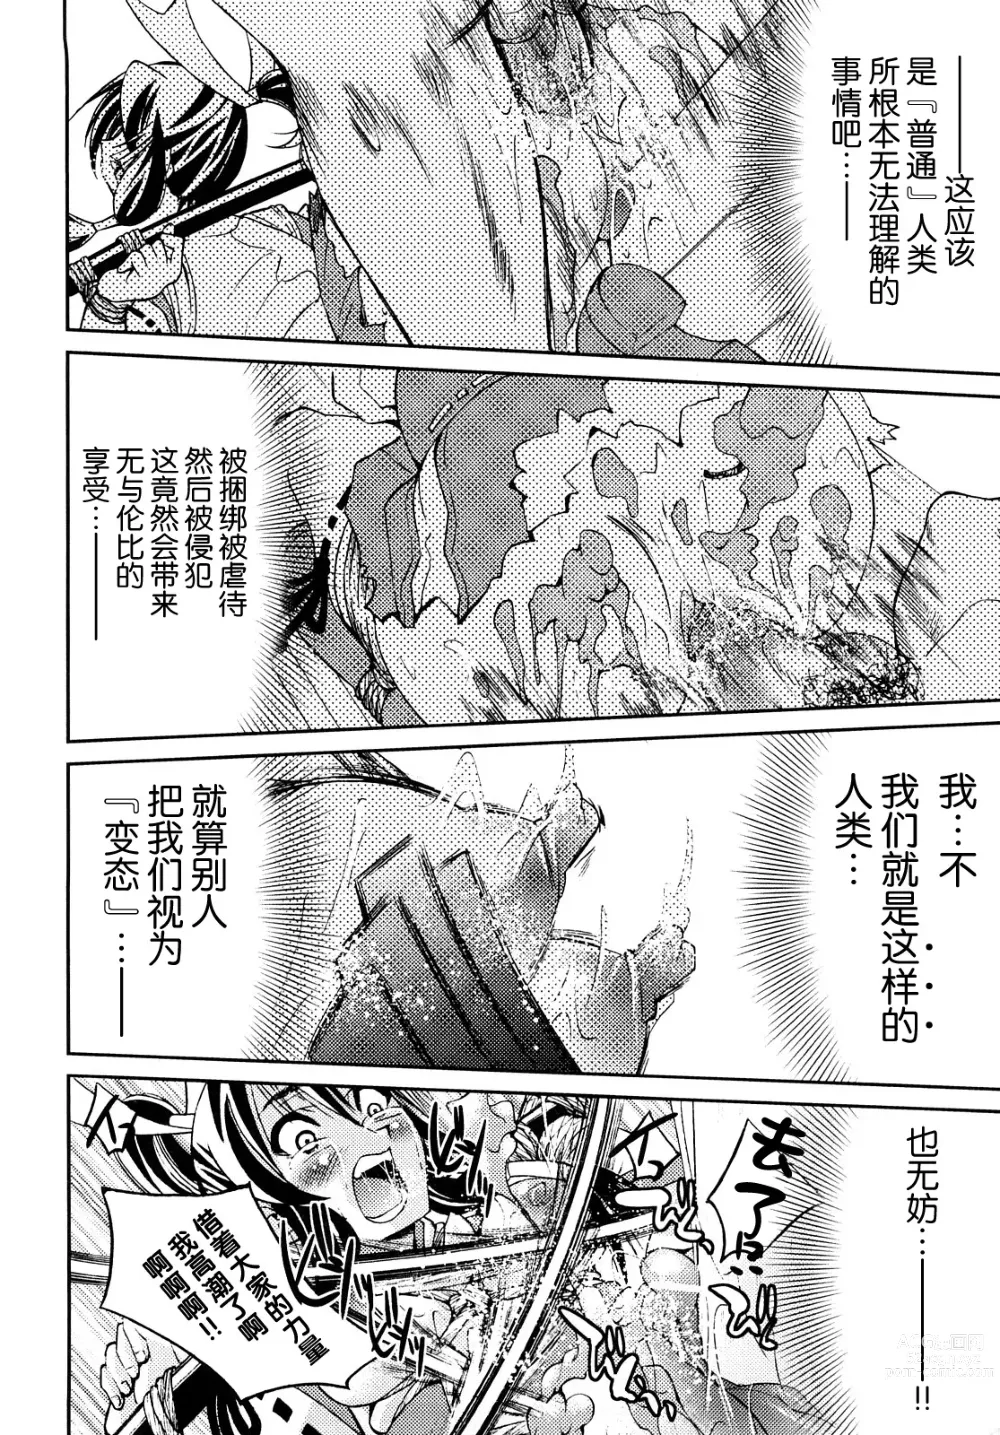 Page 201 of manga Shibarare Hime